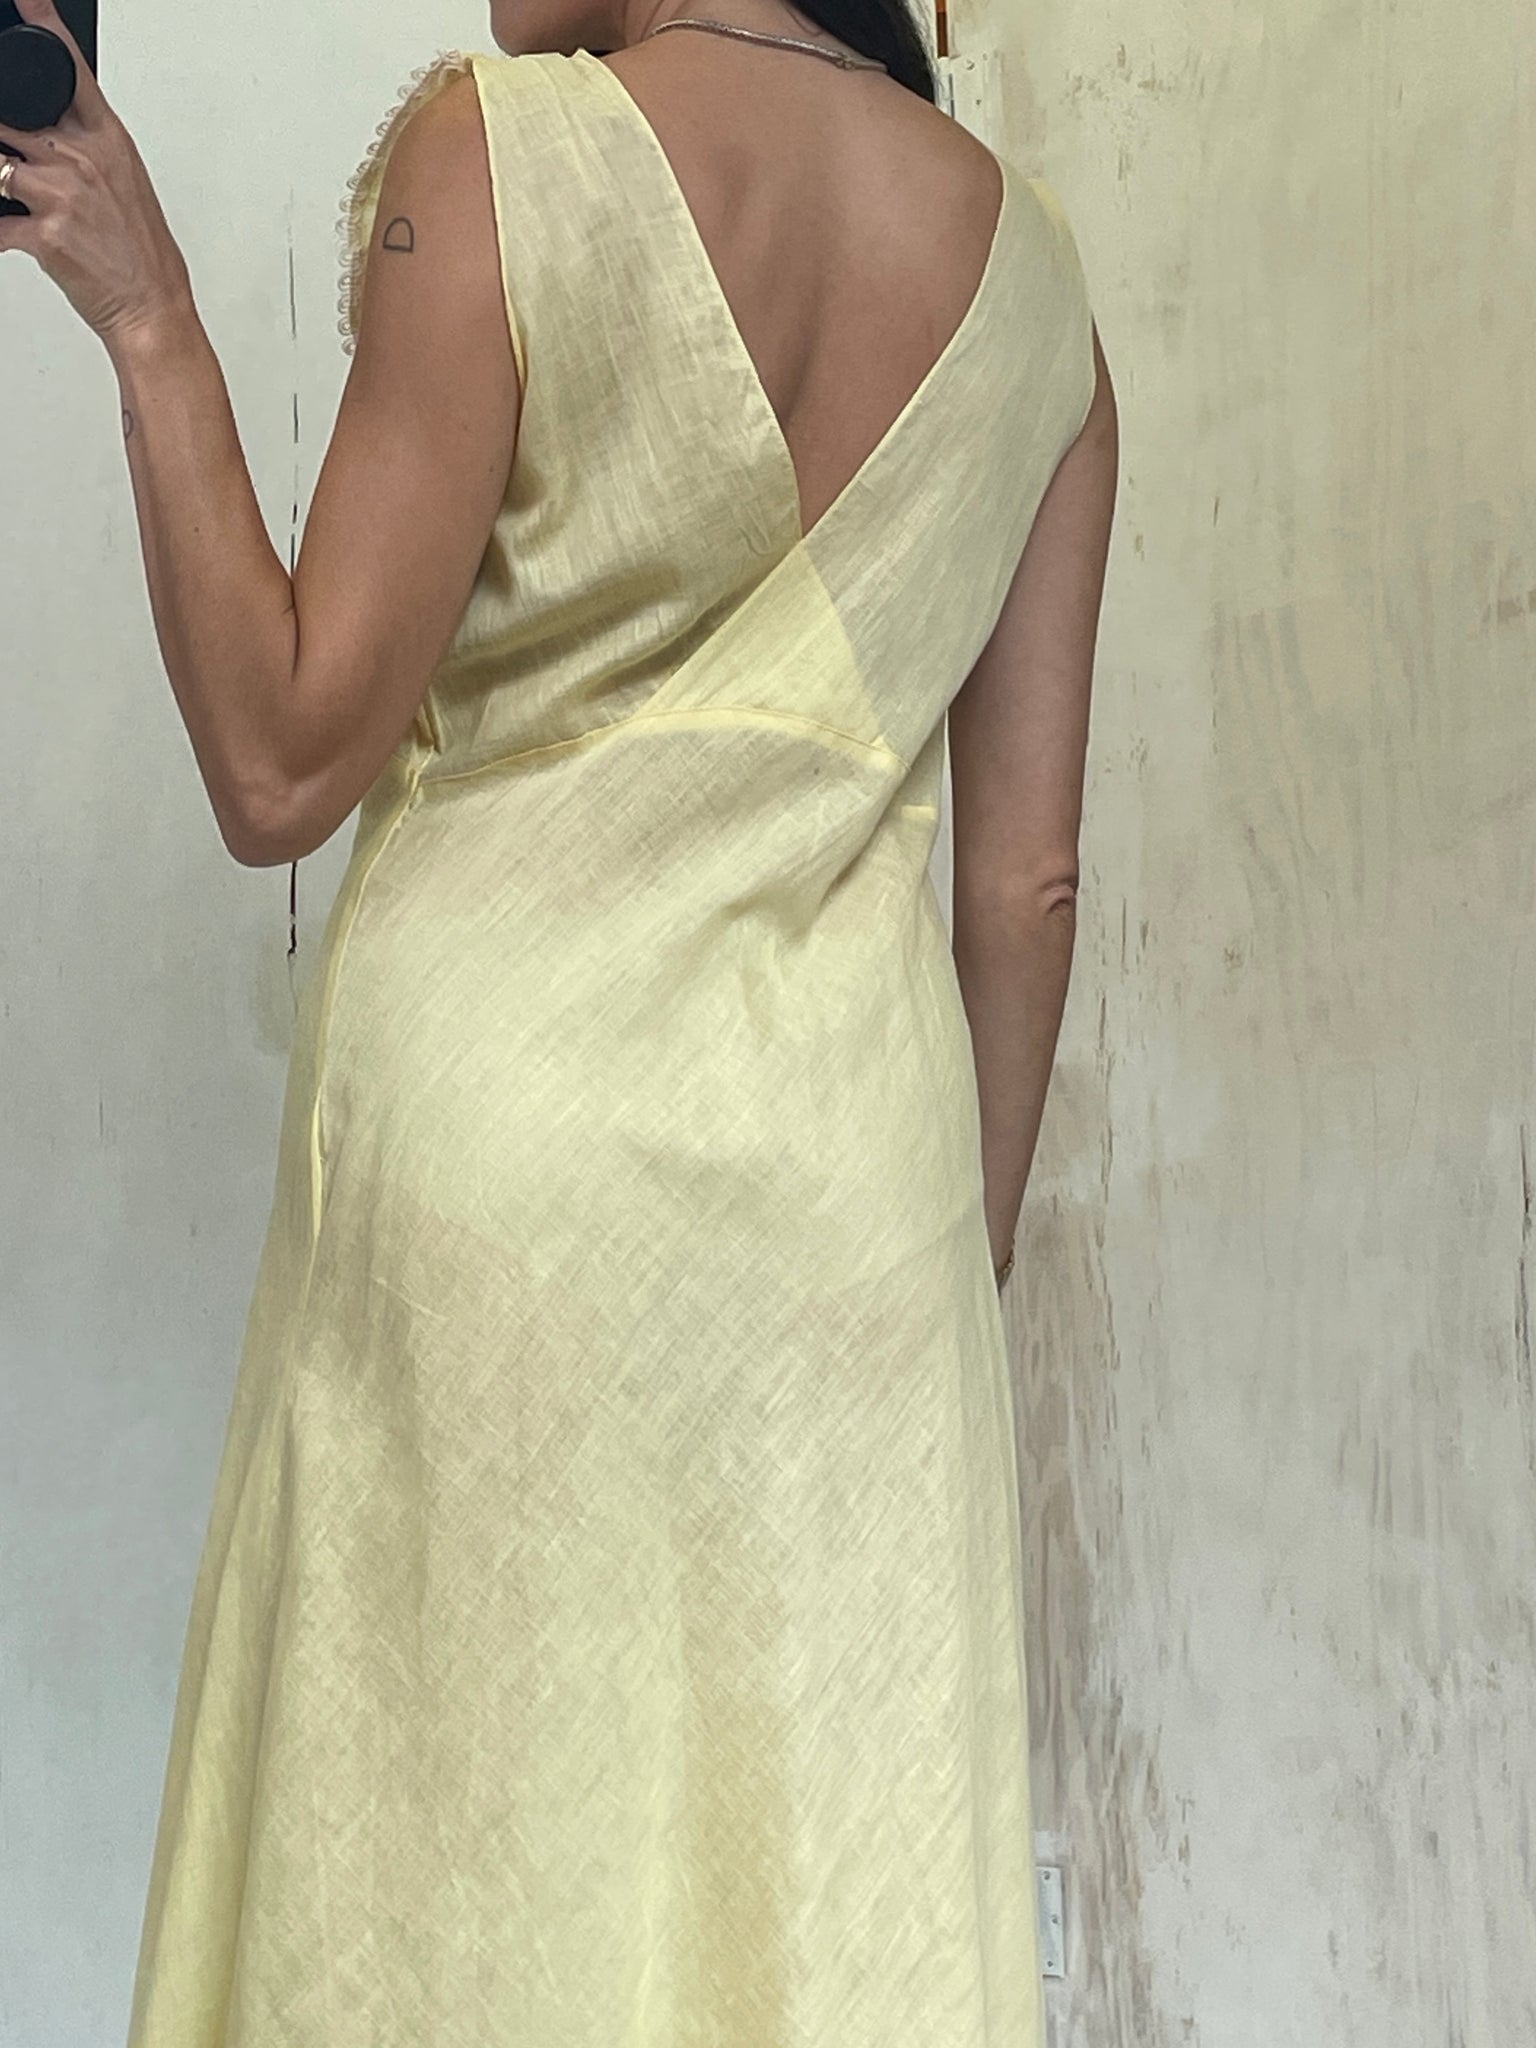 1940s Bias Cut Yellow Dress